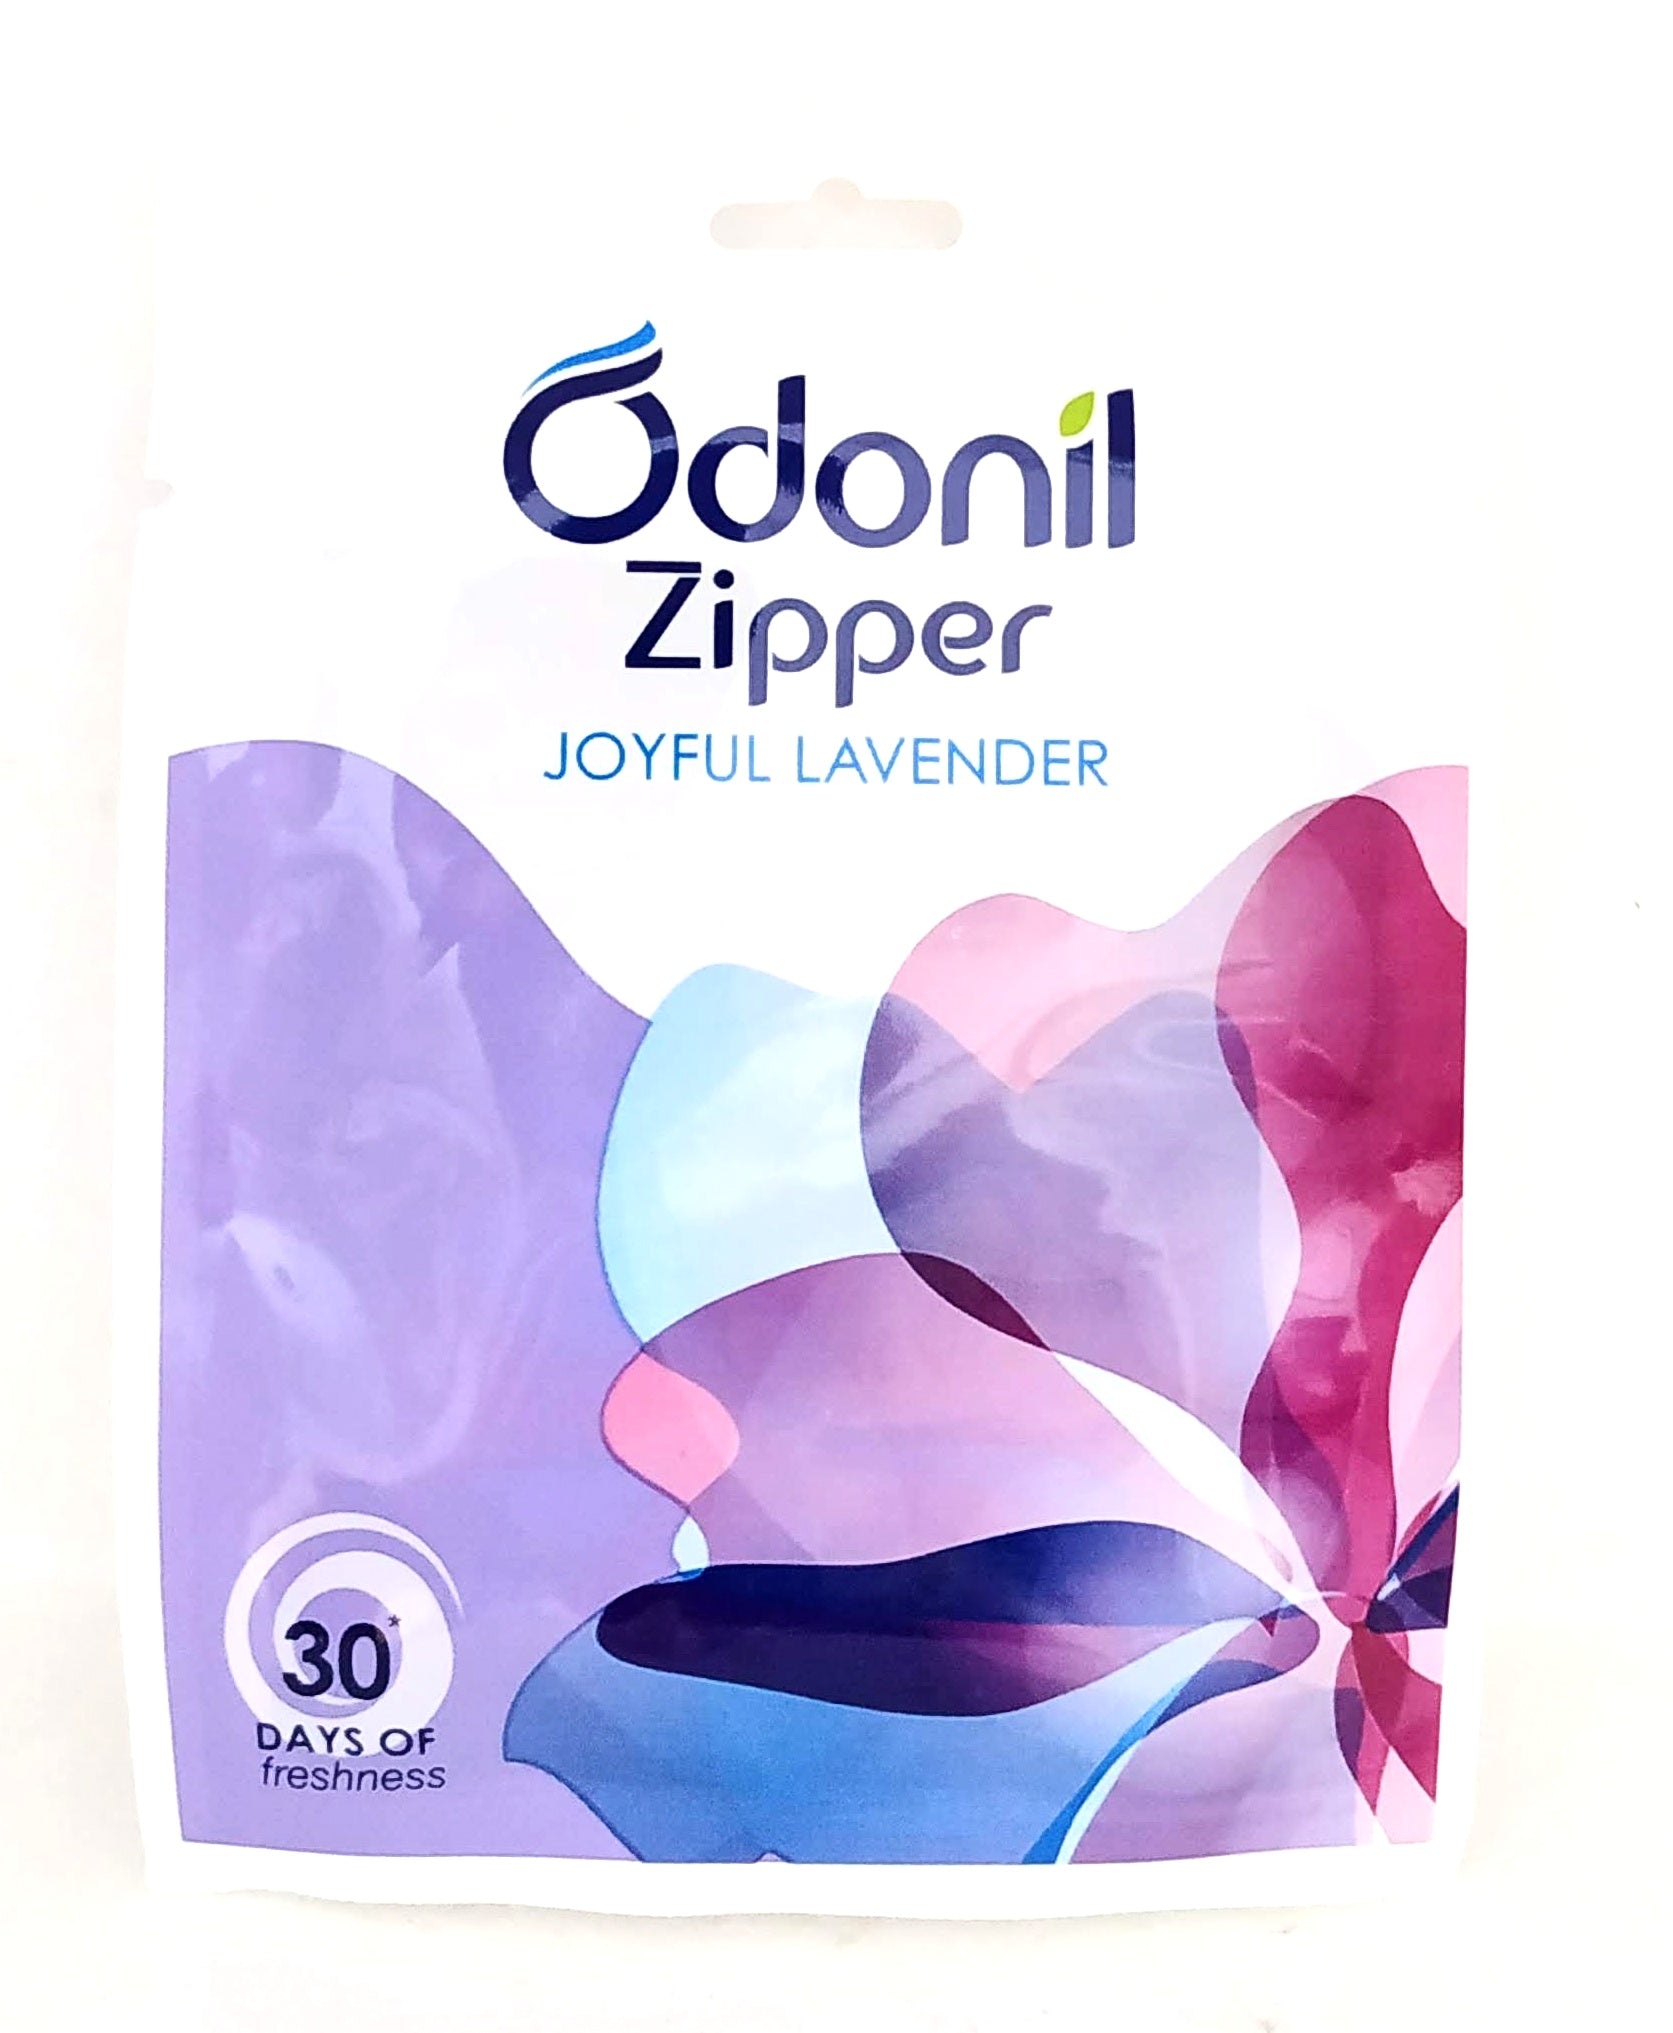 Shop Odonil Zipper - Joyful Lavender at price 55.00 from Dabur Online - Ayush Care